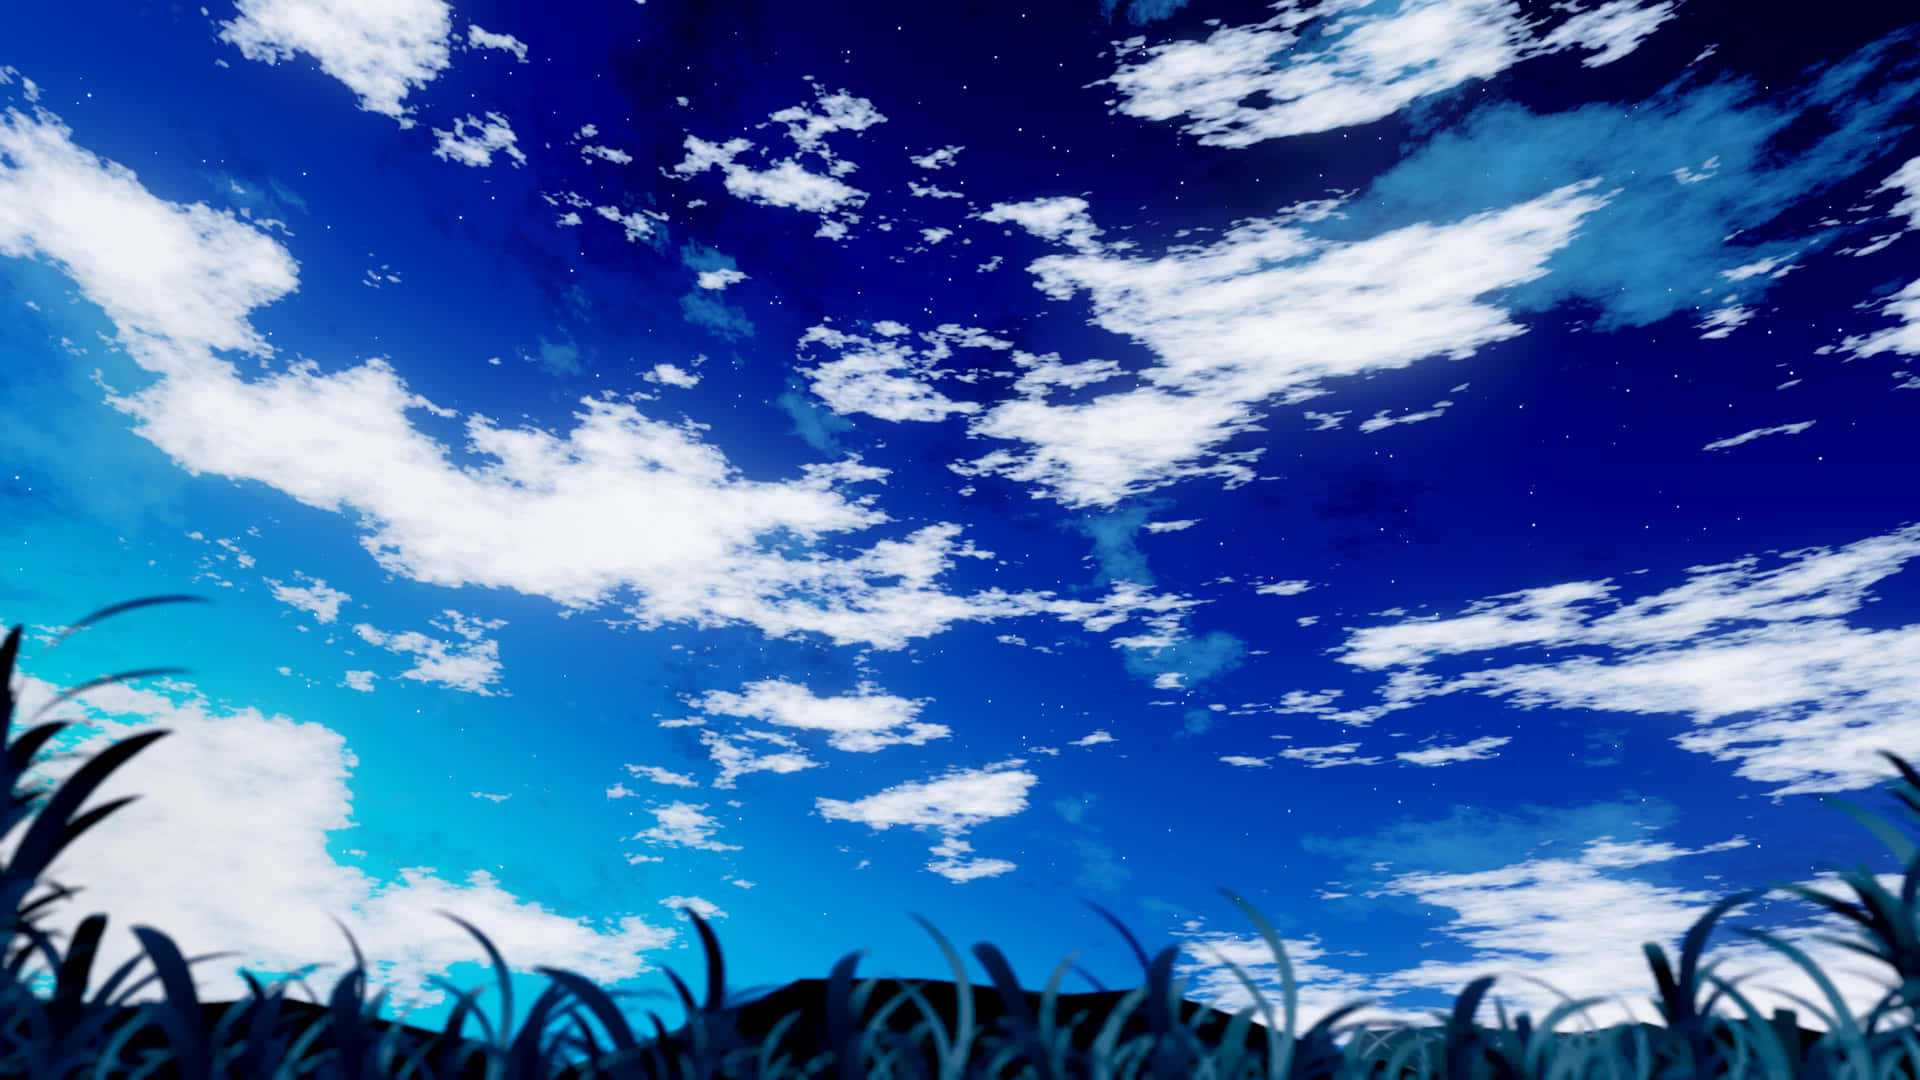 "Heavenly Blues", A Lovely Anime Sky